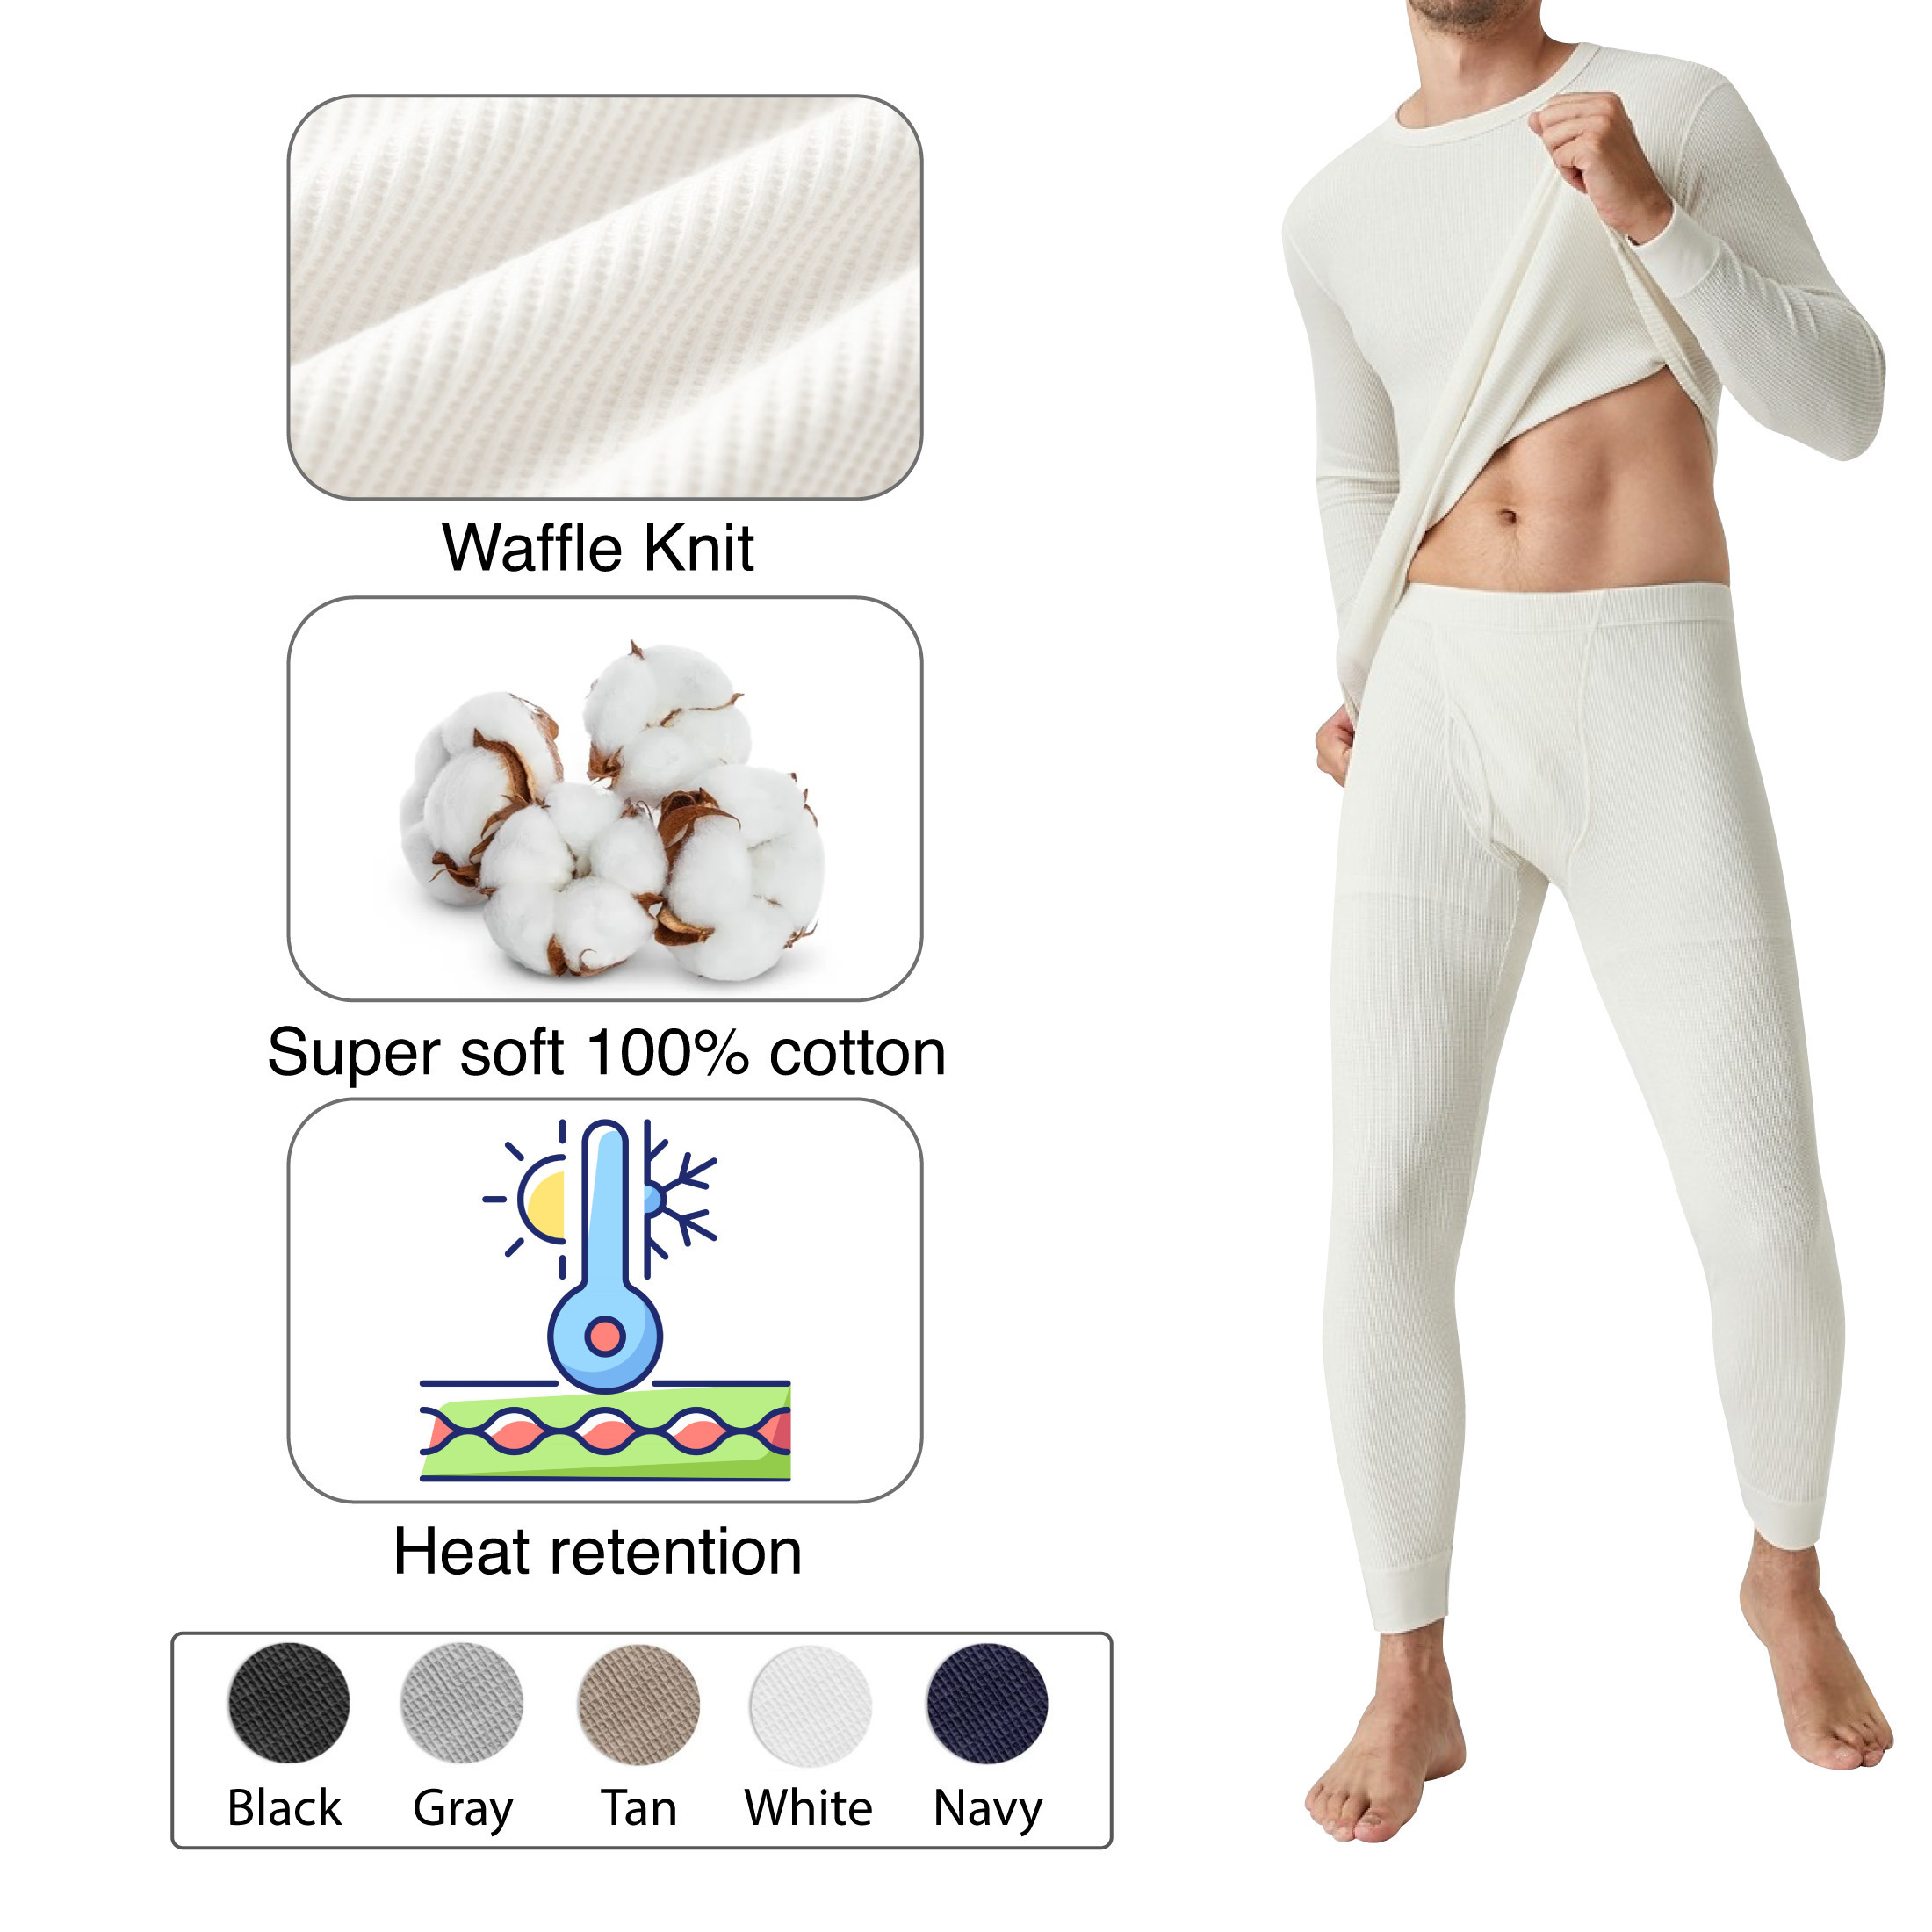 2-Piece: Men's Super Soft Cotton Waffle Knit Winter Thermal Underwear Set - Navy, Small